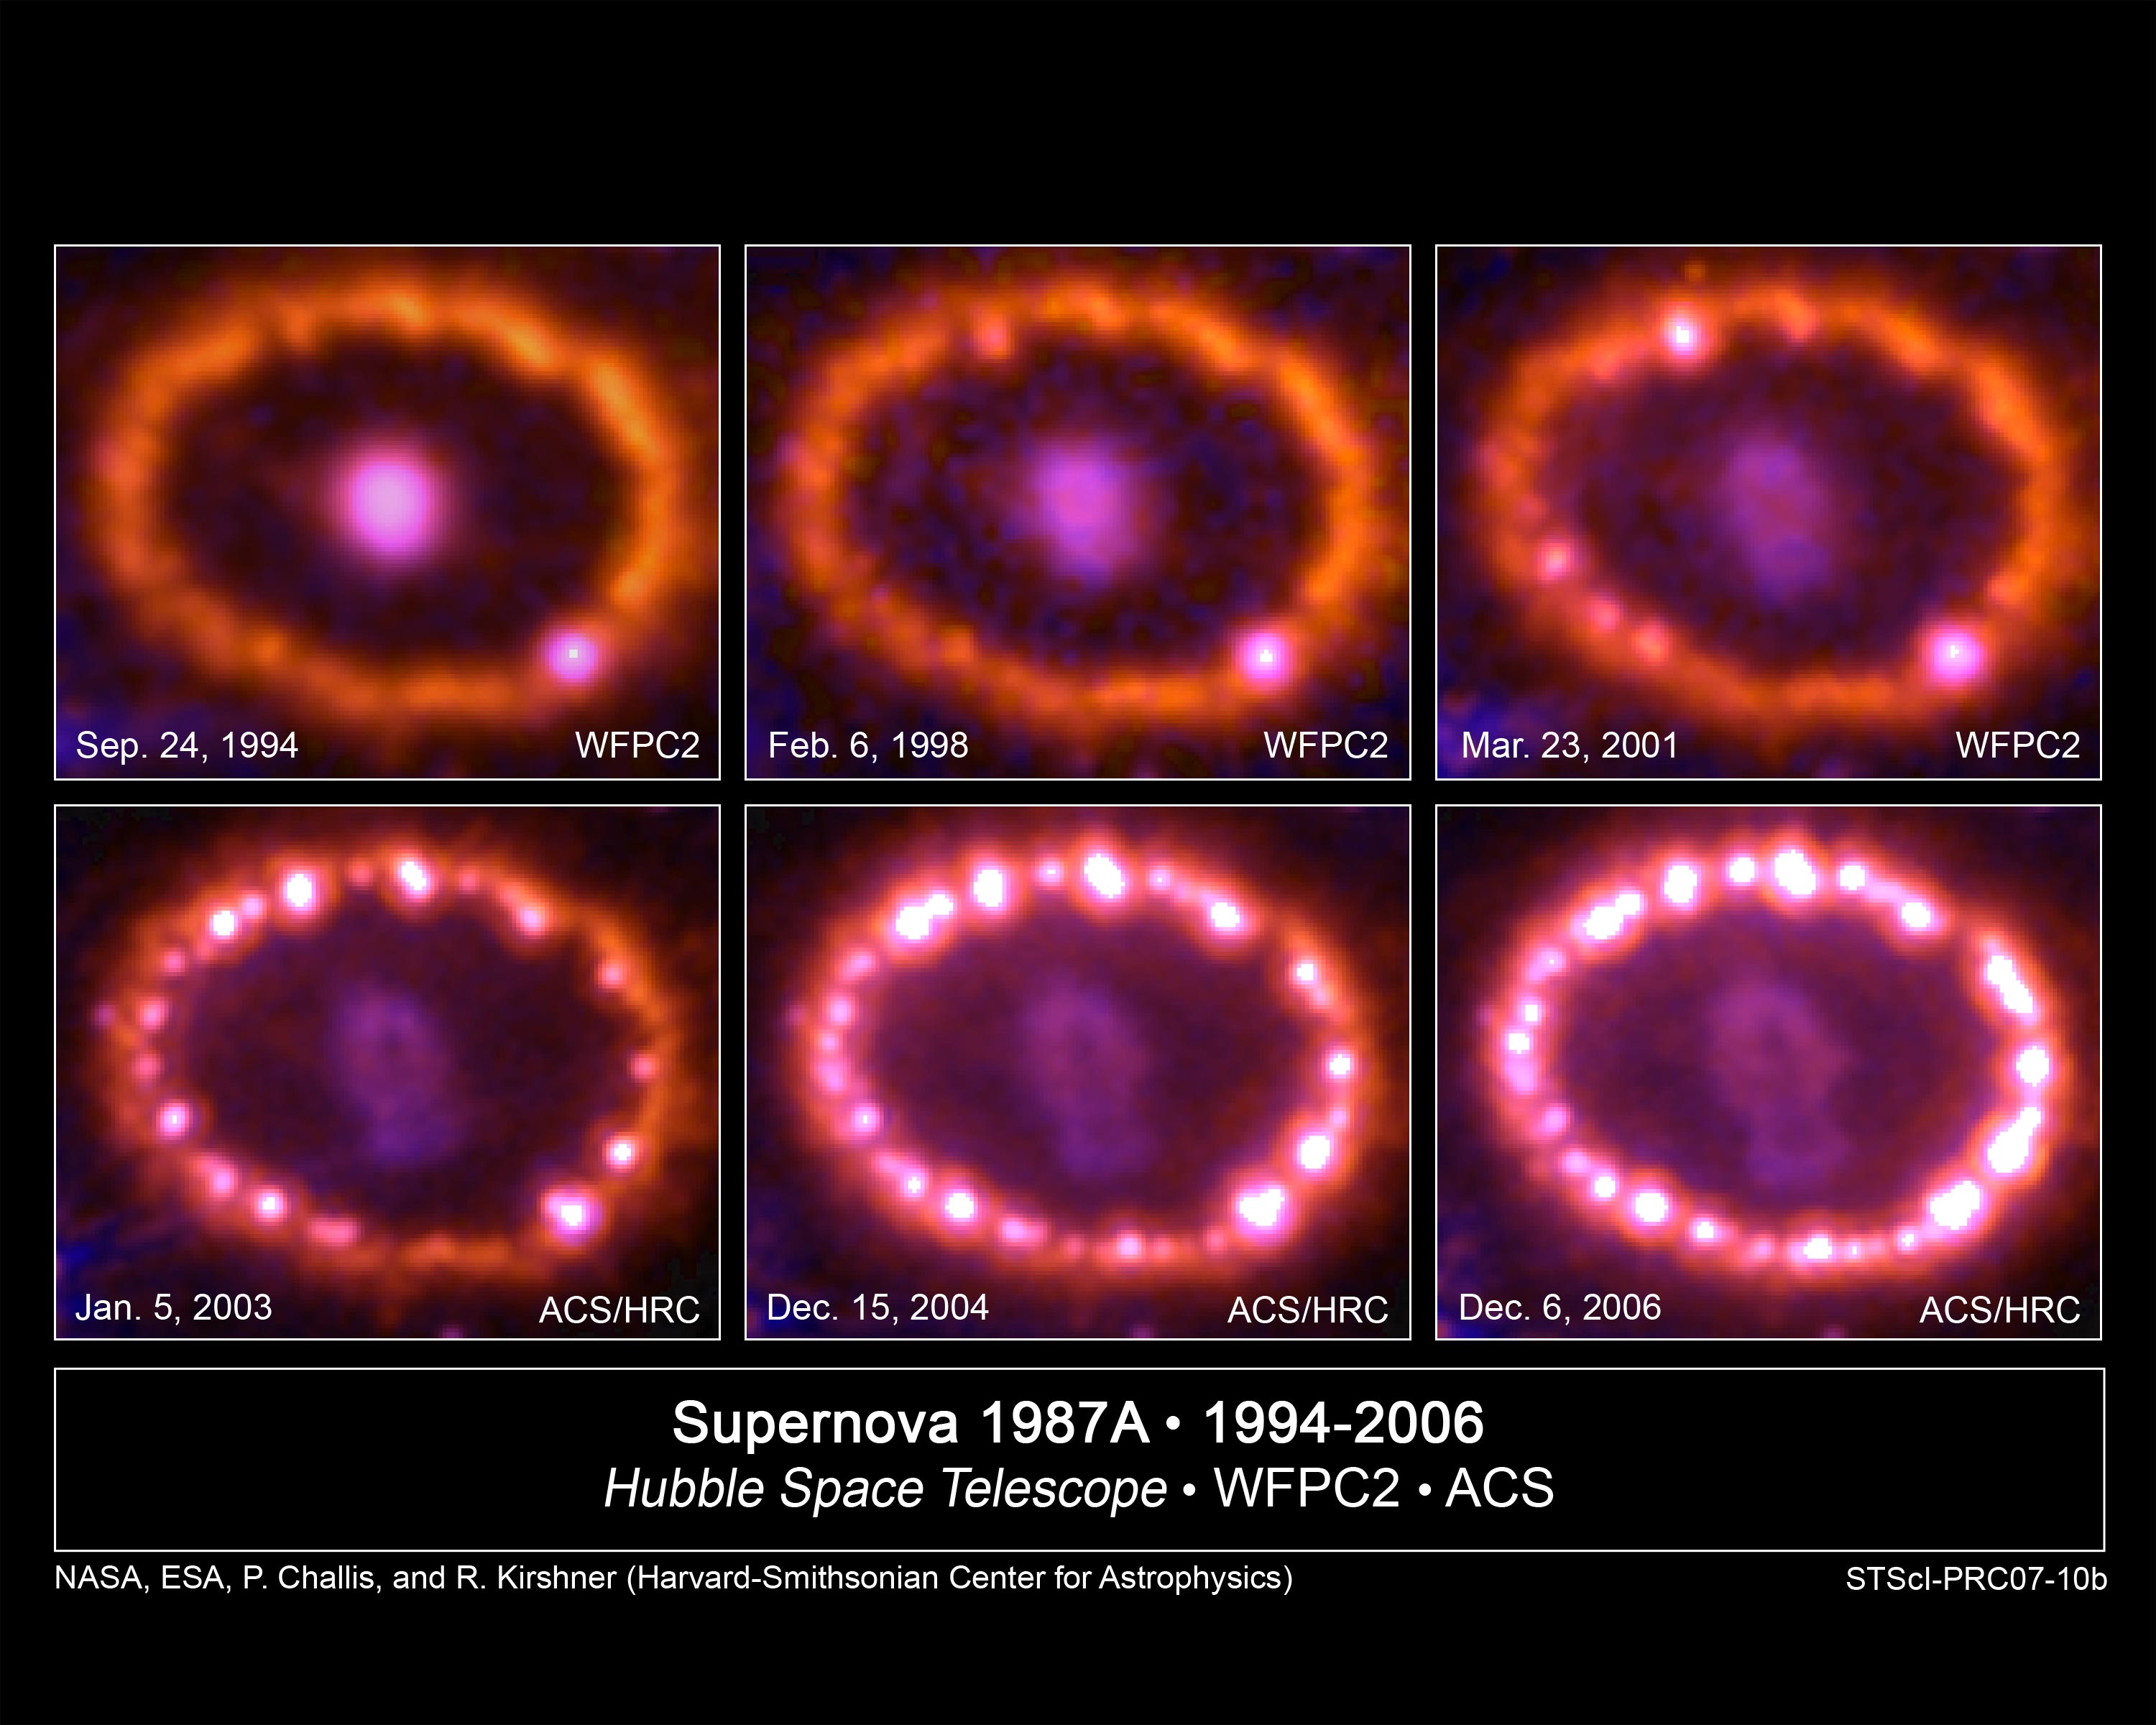 Hubble Images Chronicle Supernova 1987a's Inner Ring's evolution.